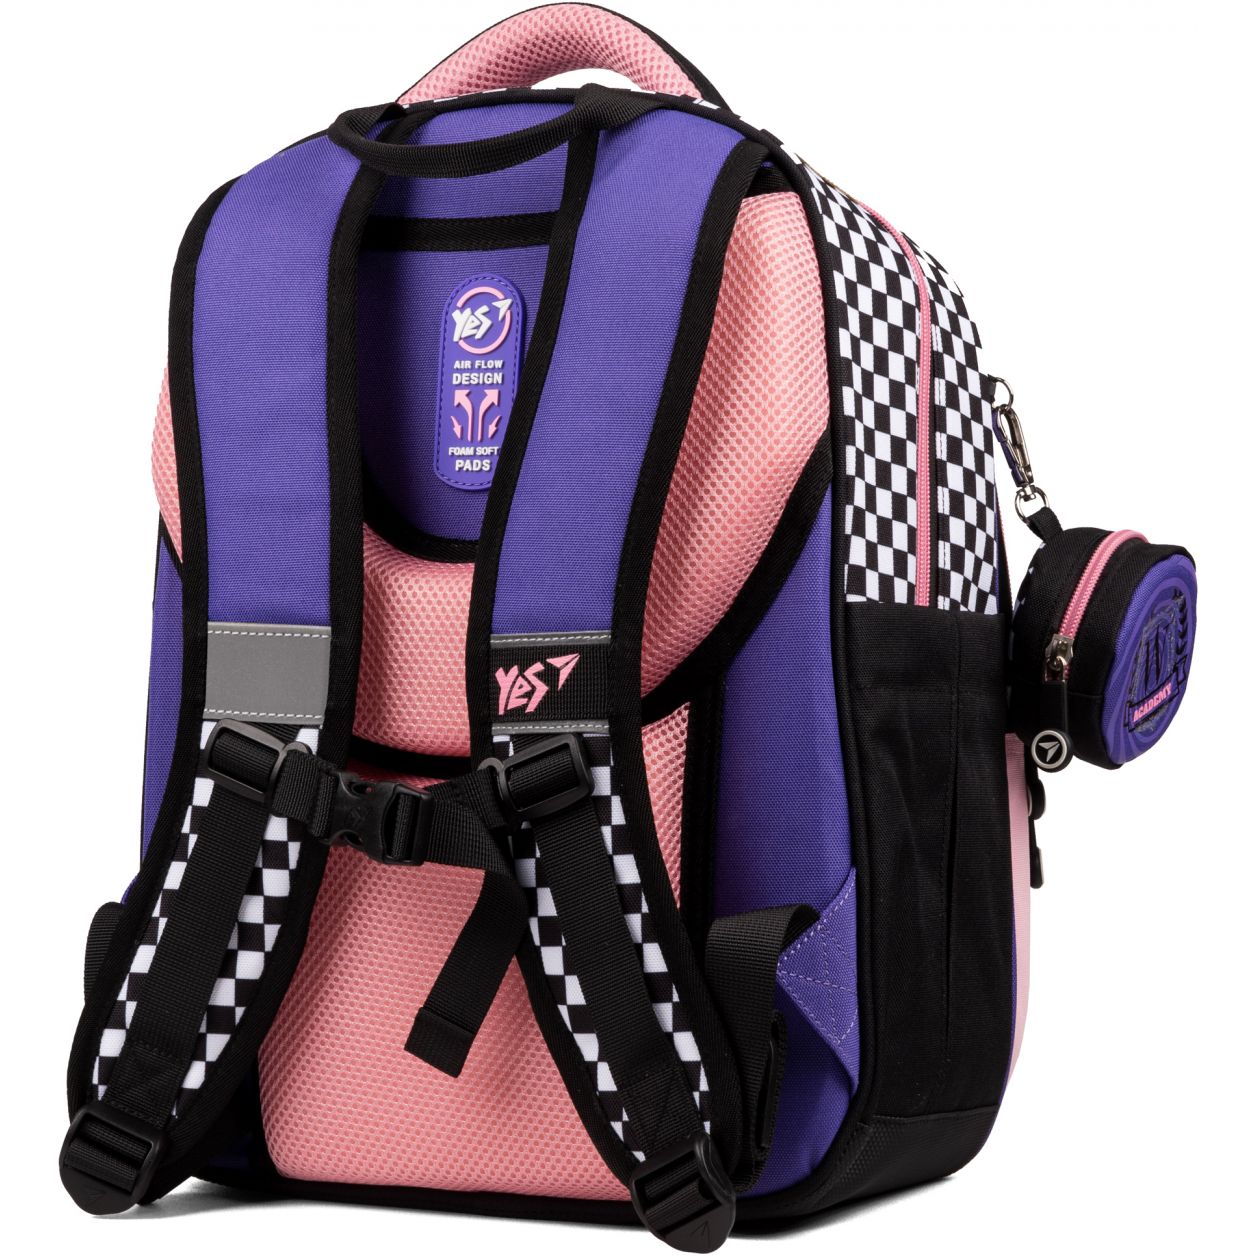 Рюкзак Yes S-91 Collection Academy з пеналом та сумкою (559796) - фото 3